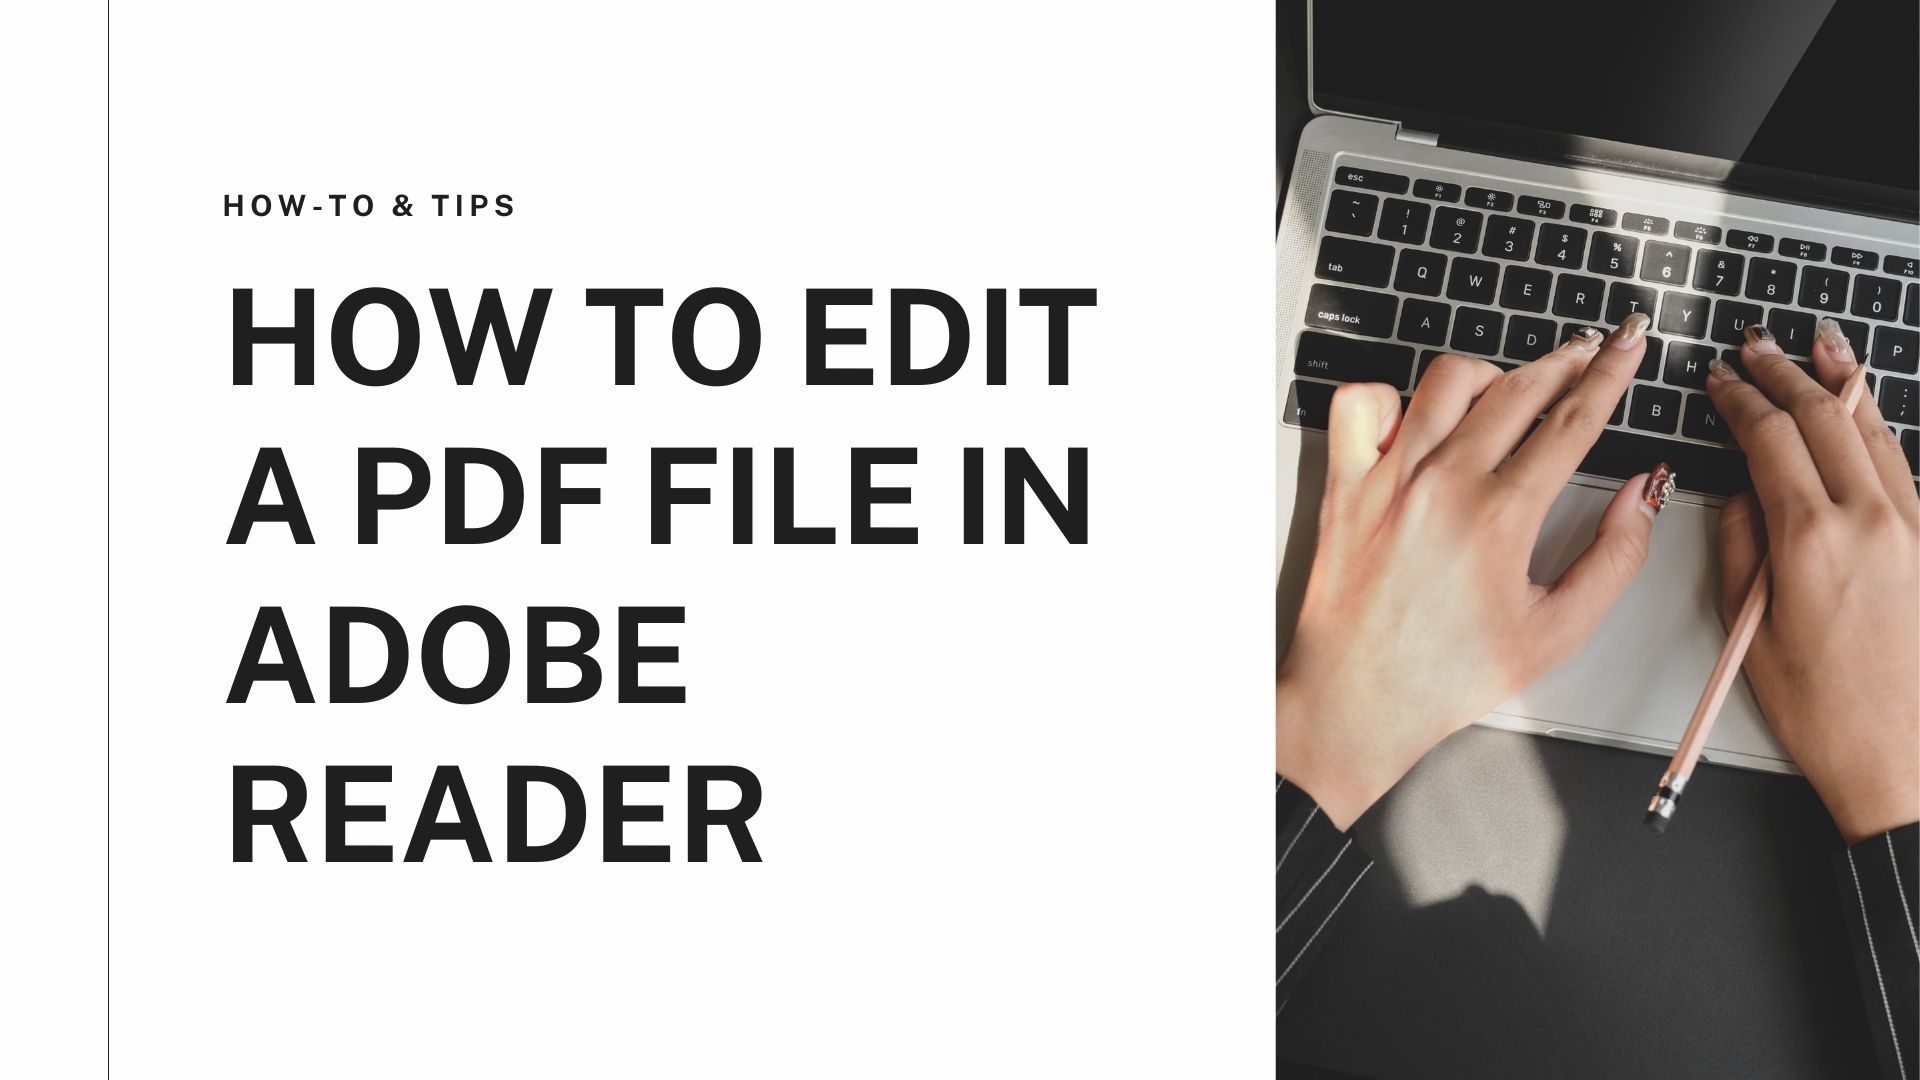 How to edit a PDF file in Adobe Reader.jpg